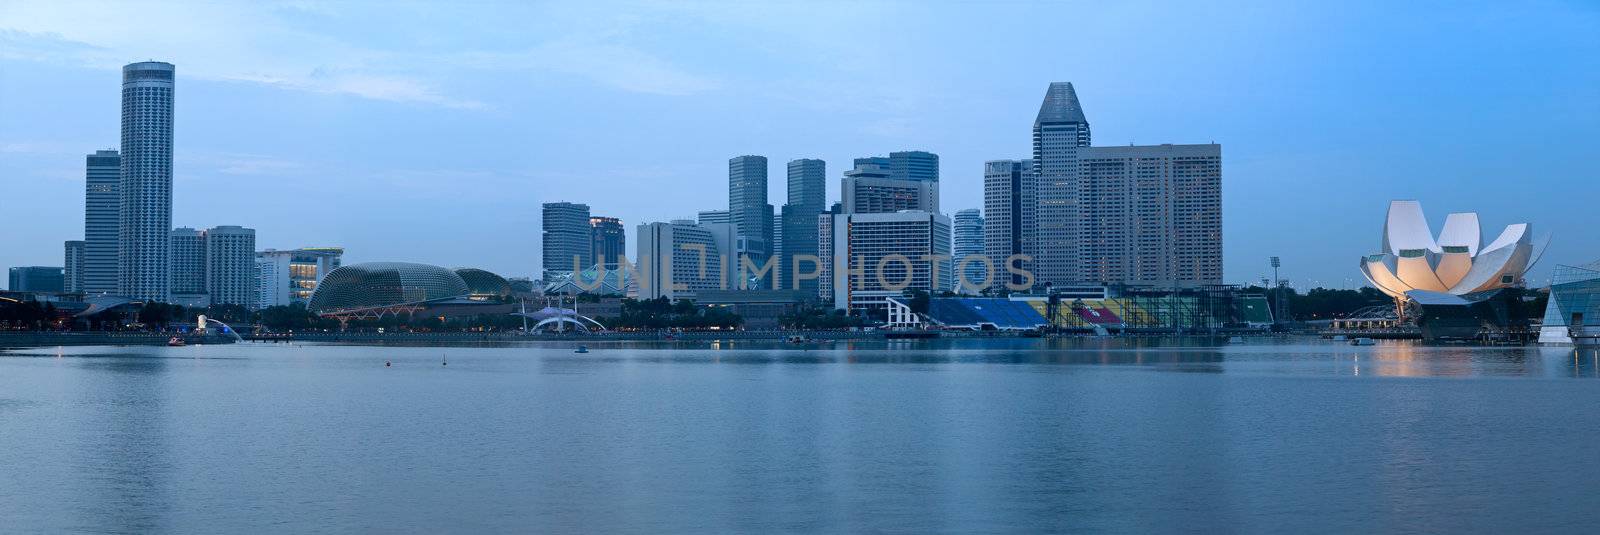 Singapore skyline by dimol